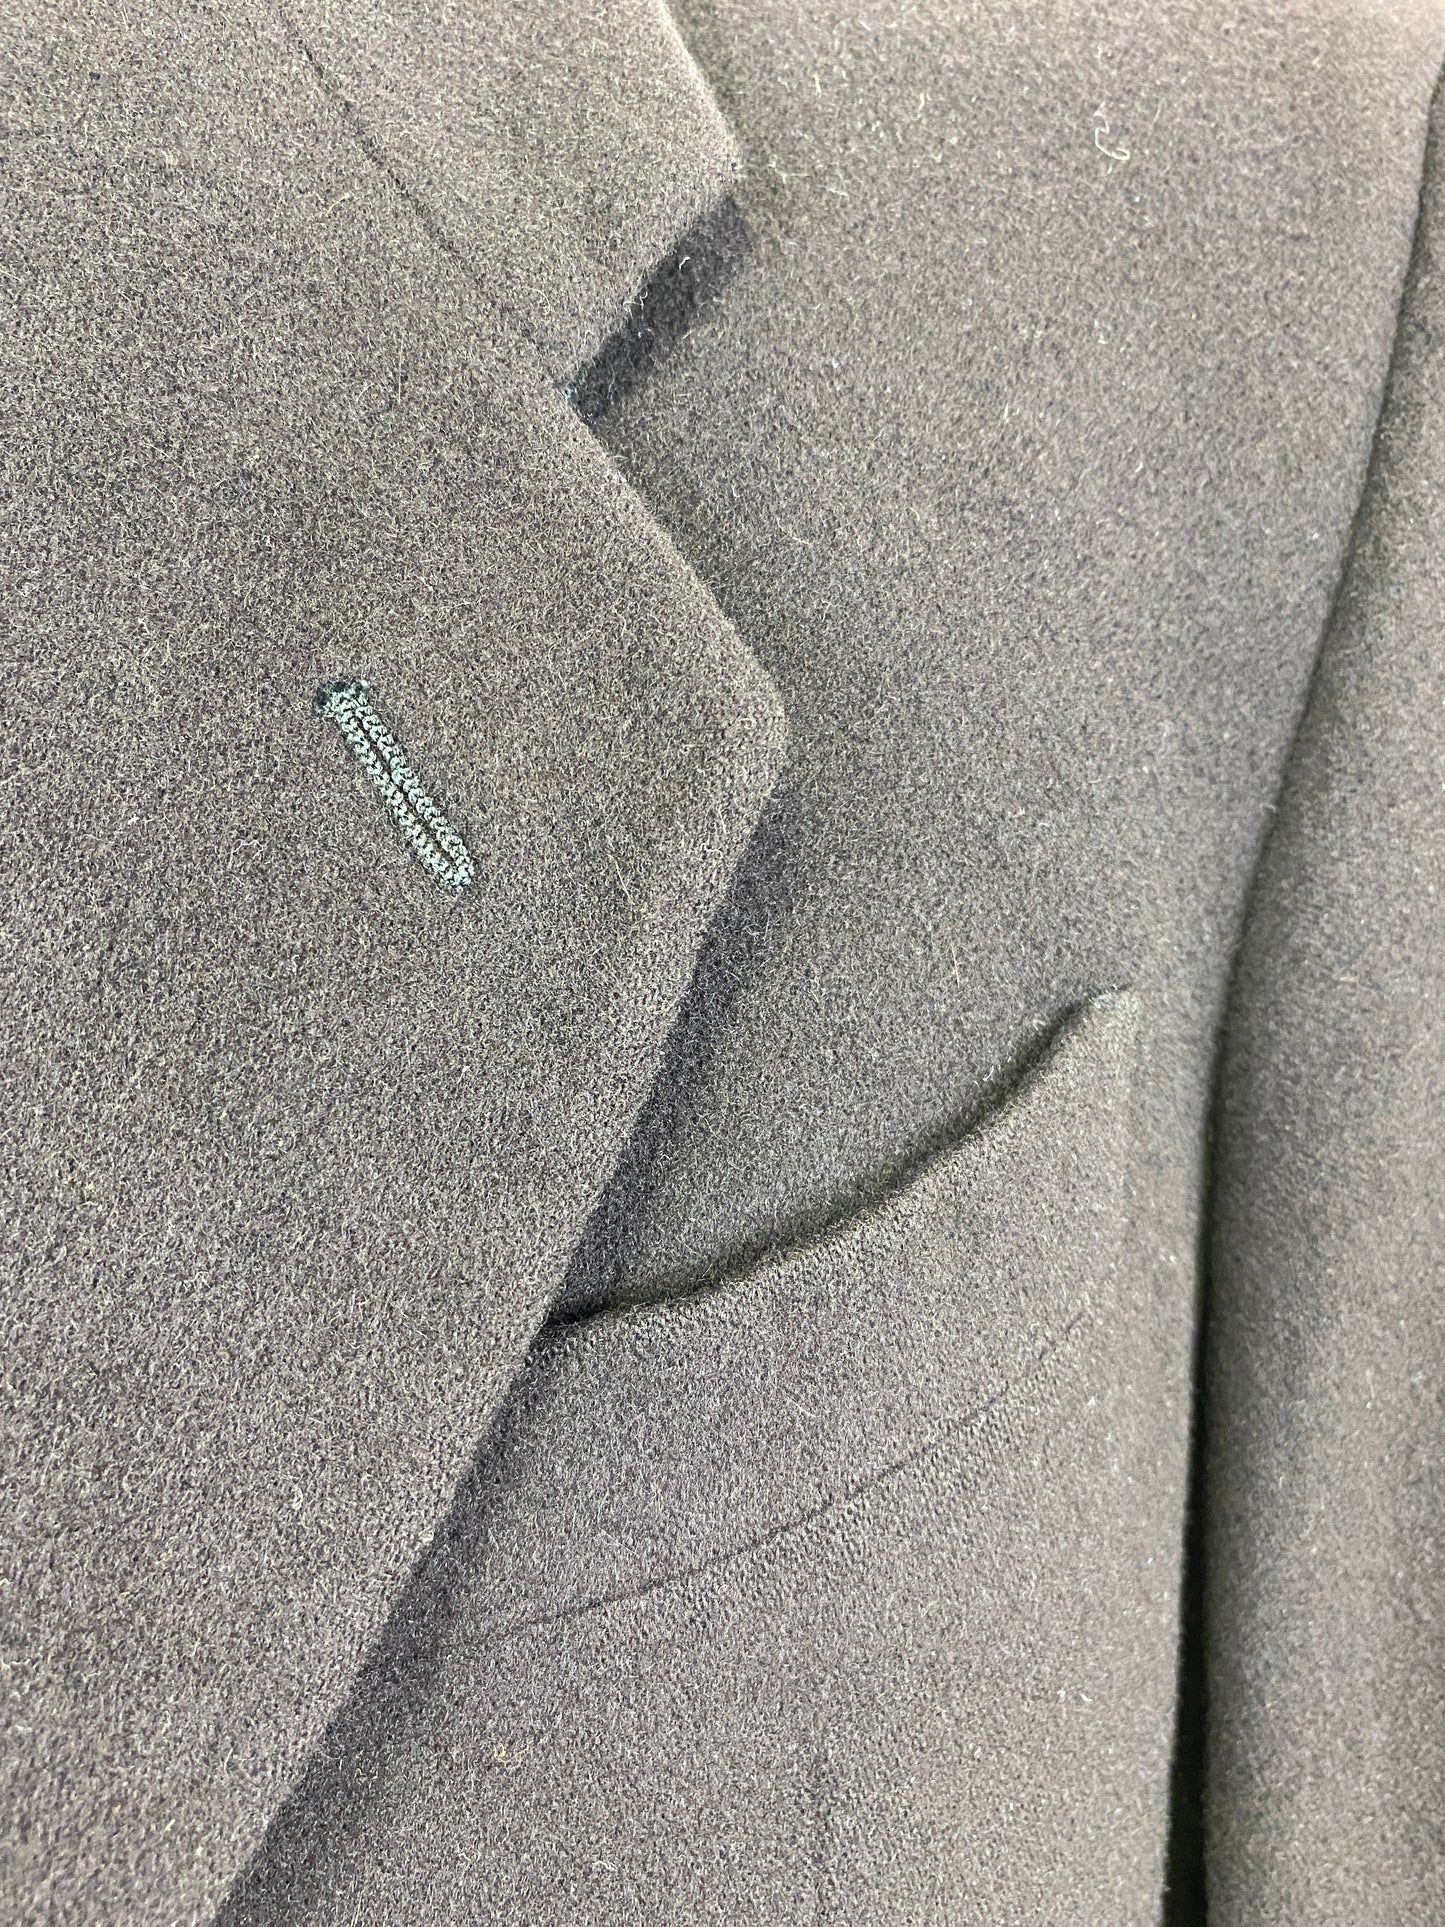 Late 1980s Vintage Brown Men's Italian Designer Blazer, Giorgio Armani, Double-Button Cashmere Jacket, C42